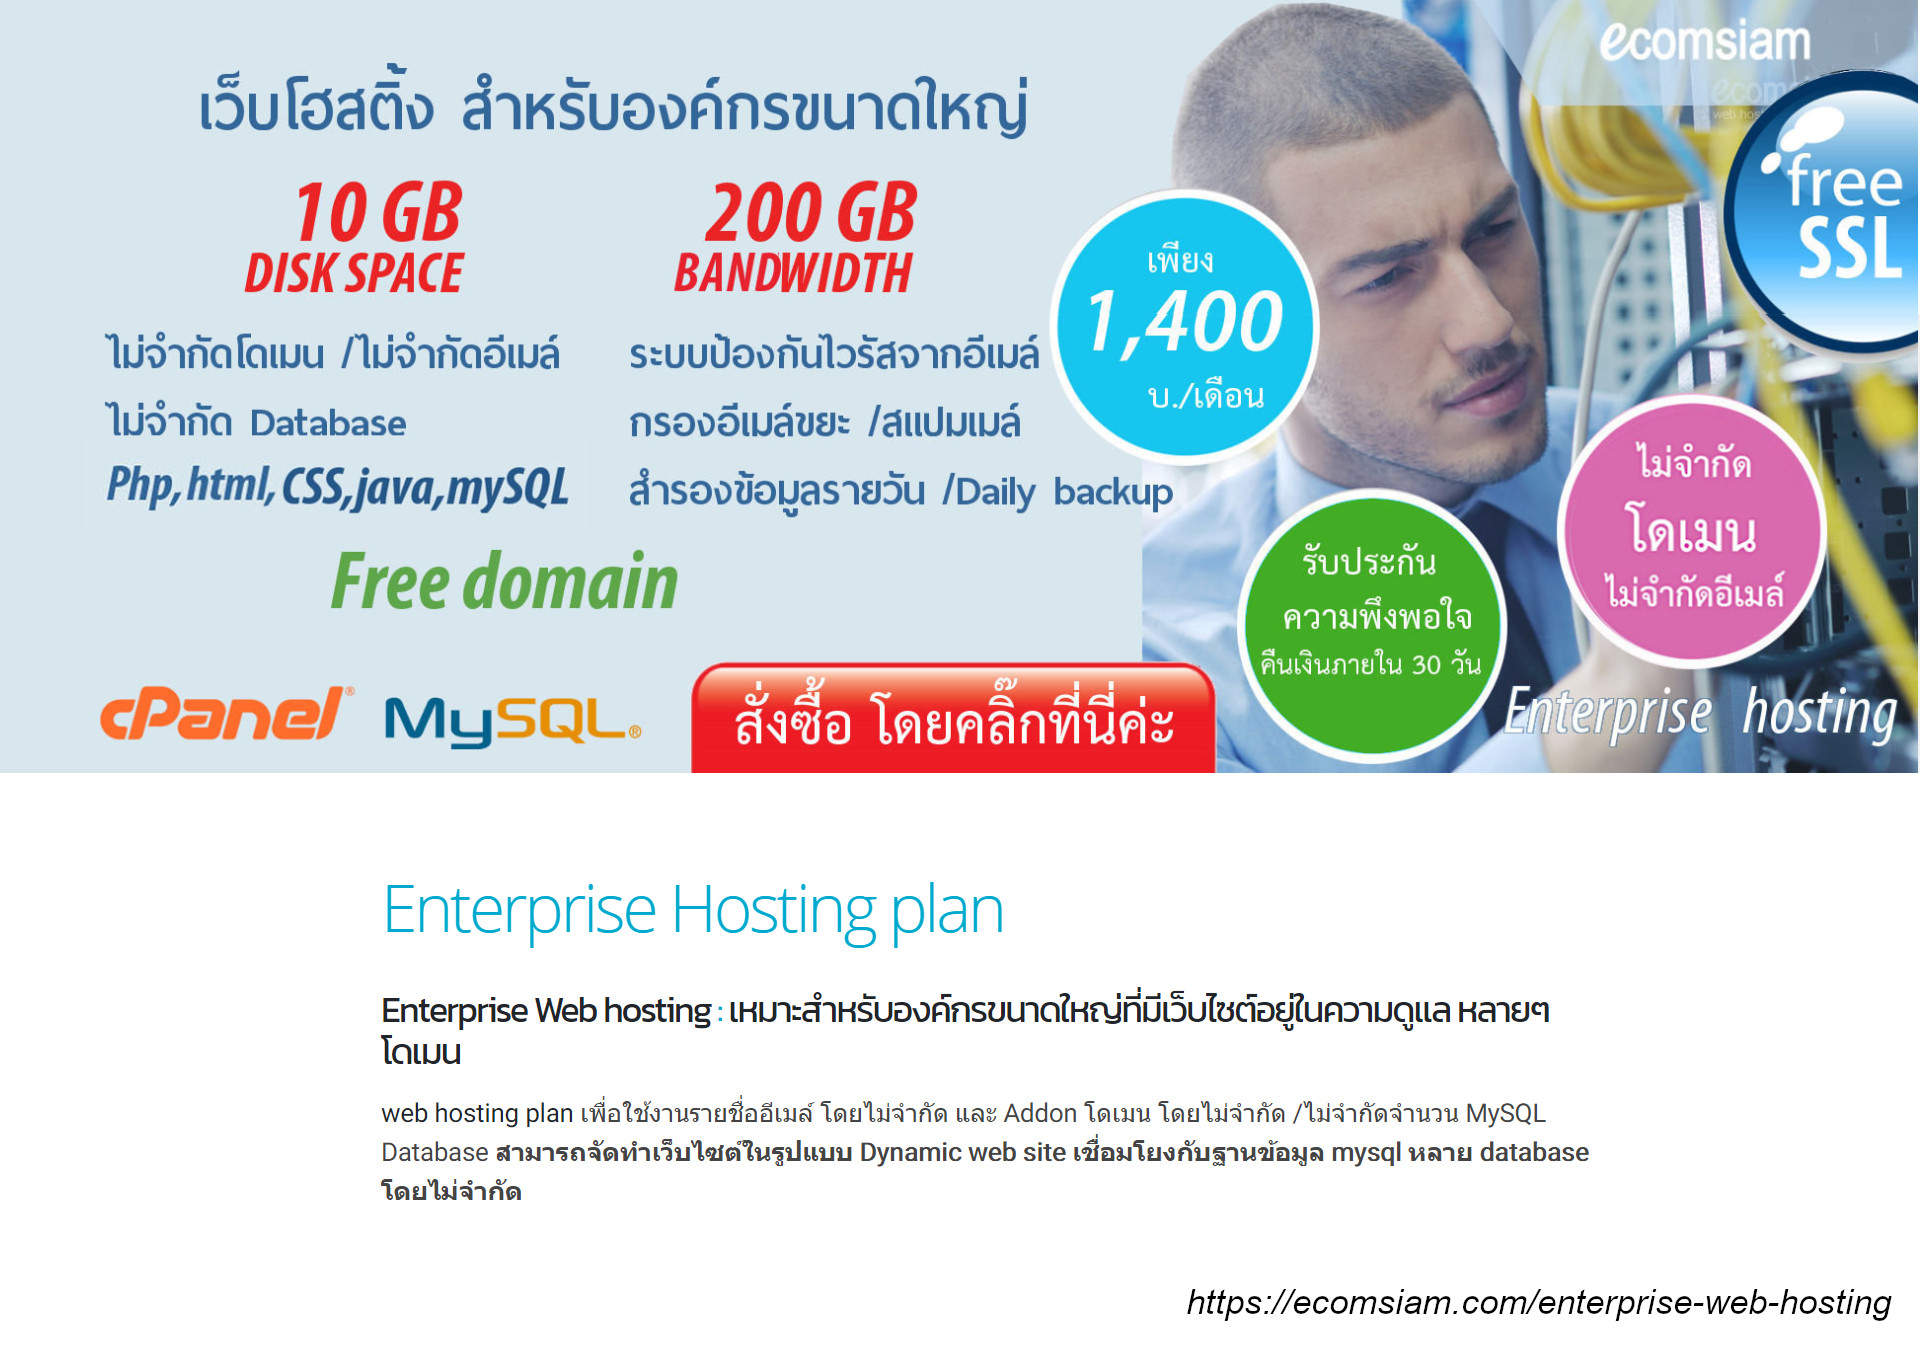 enterprise-hosting-brochure-001.jpg?1620014175144